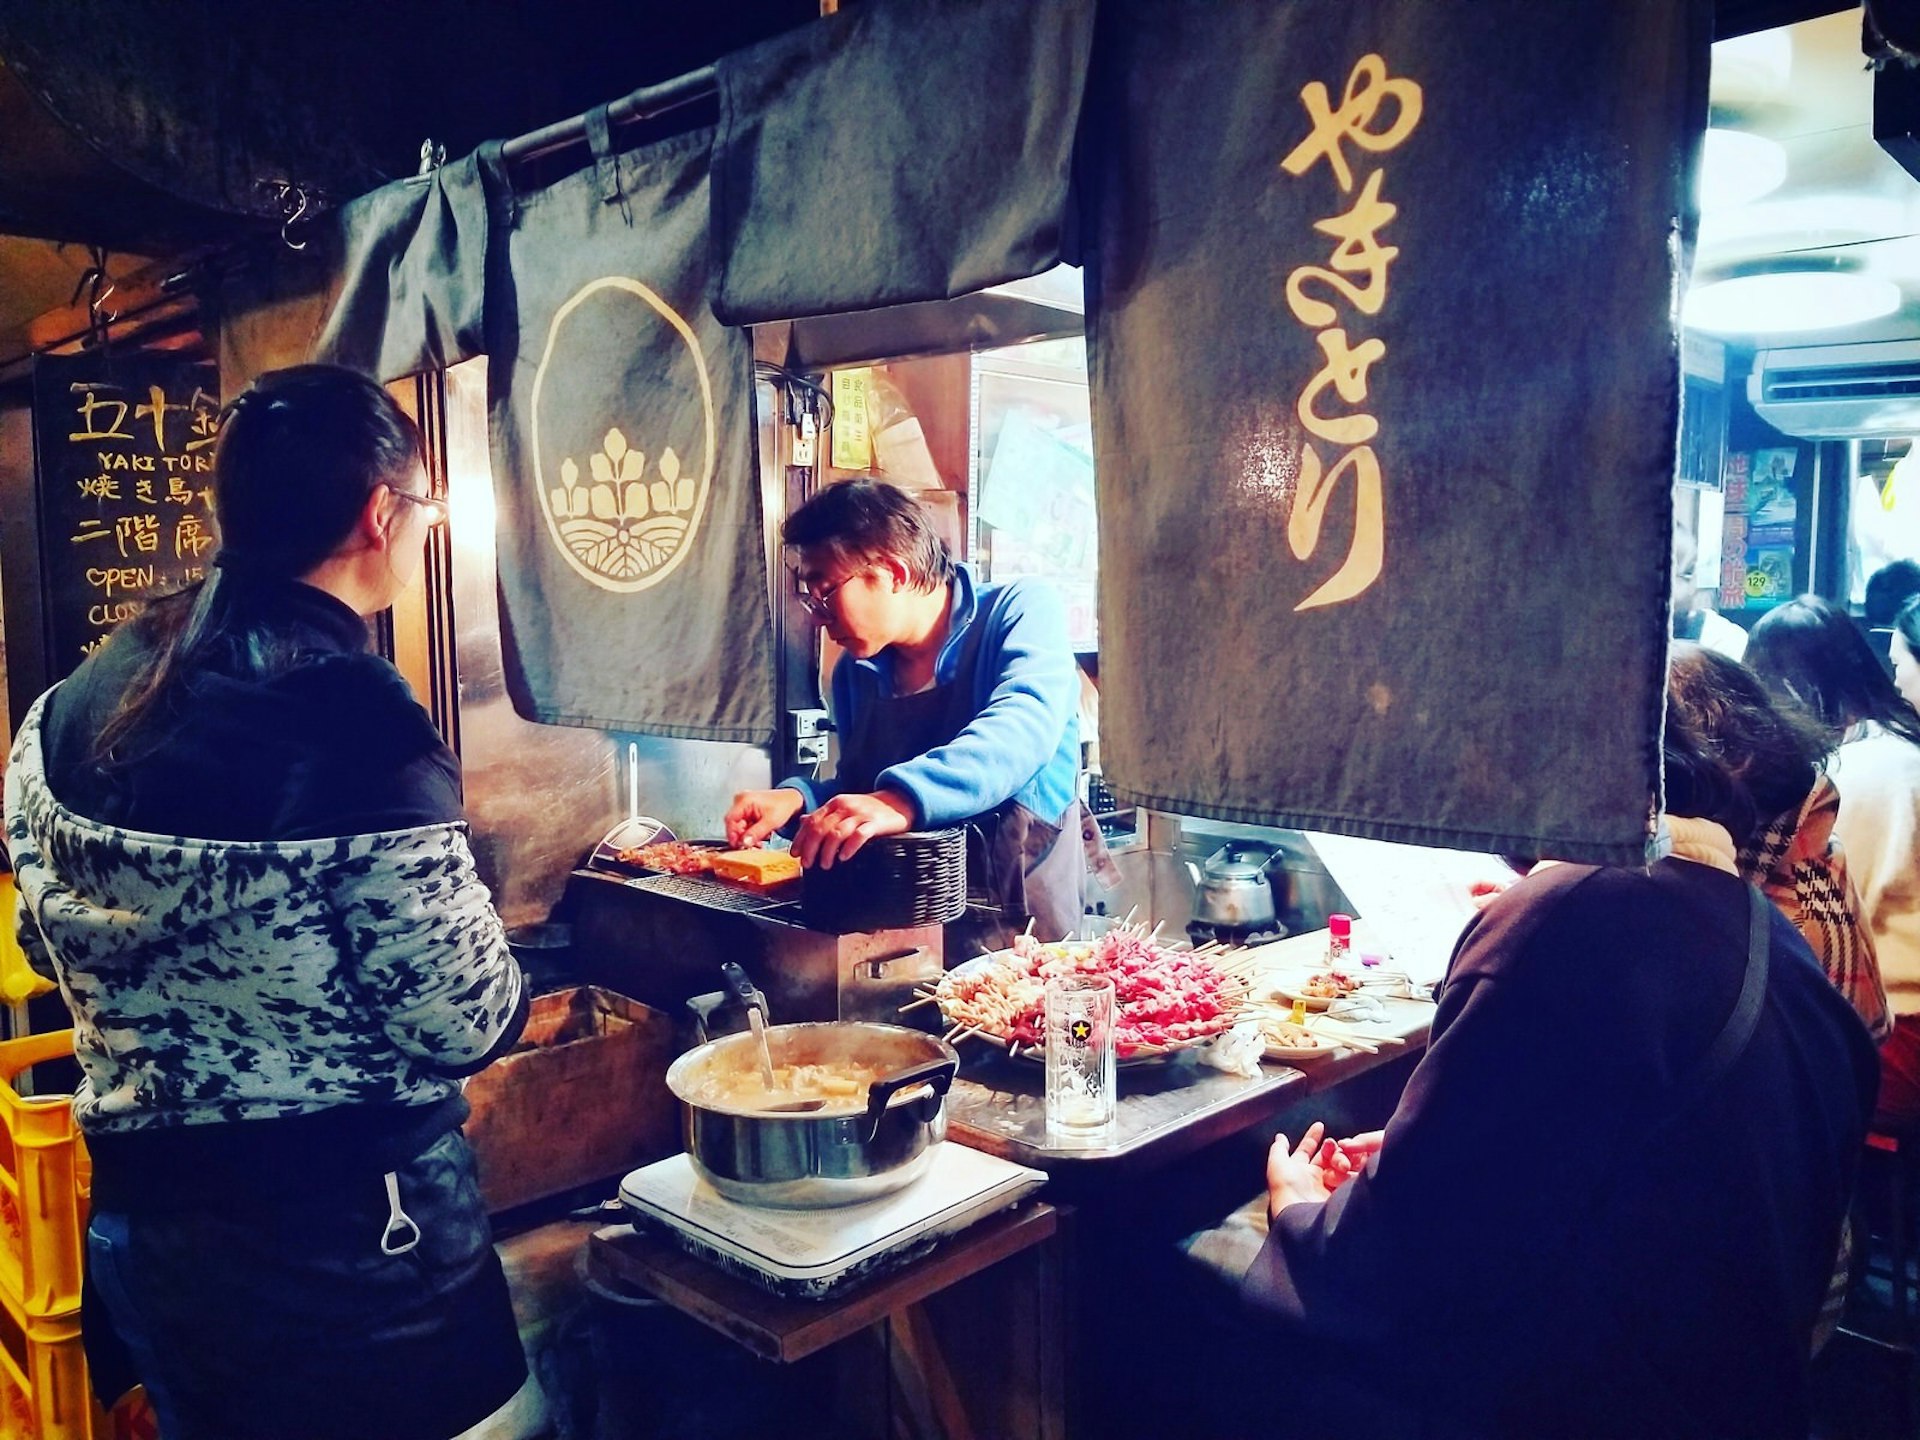 A man serves grilled chicken skewers at a tiny restaurant open onto the street in the Golden Gai area of Tokyo © Khaikholun Vaiphei / Shutterstock